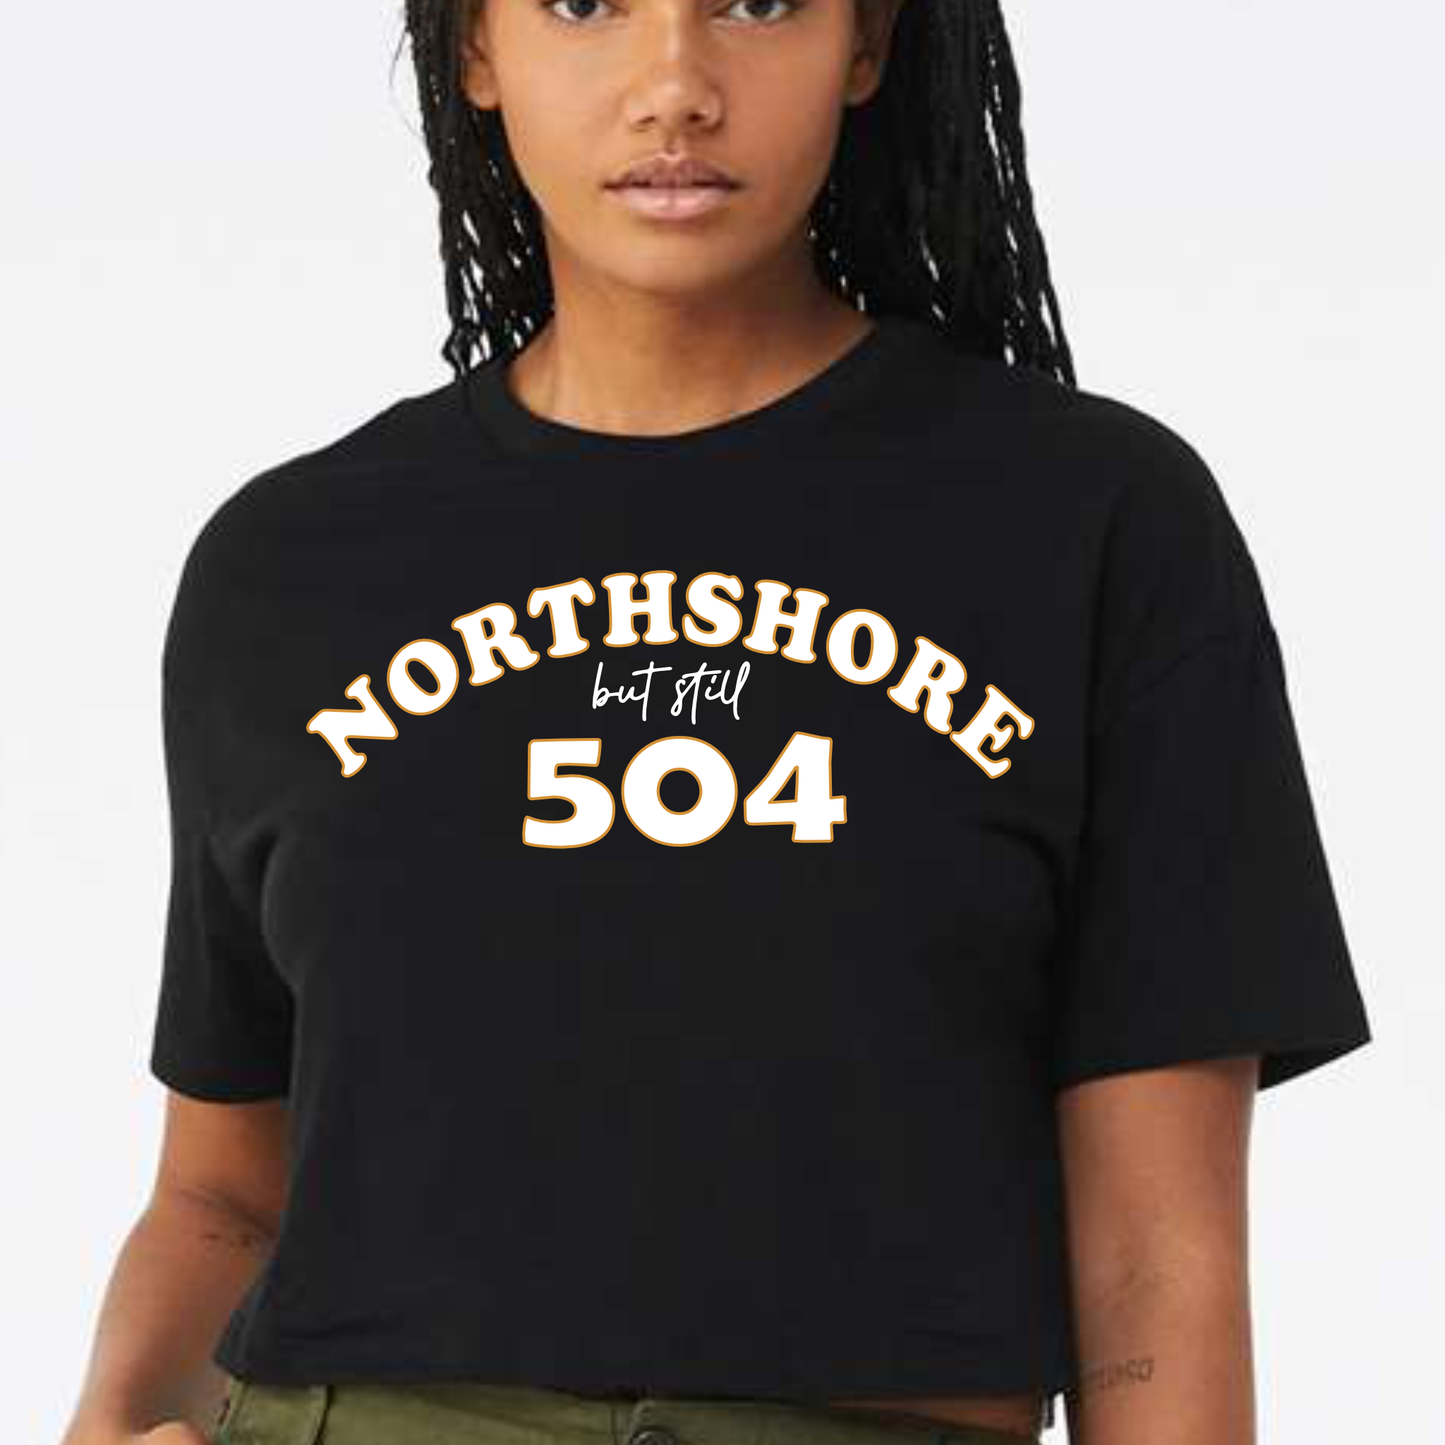 Northshore but still 504 - crop top